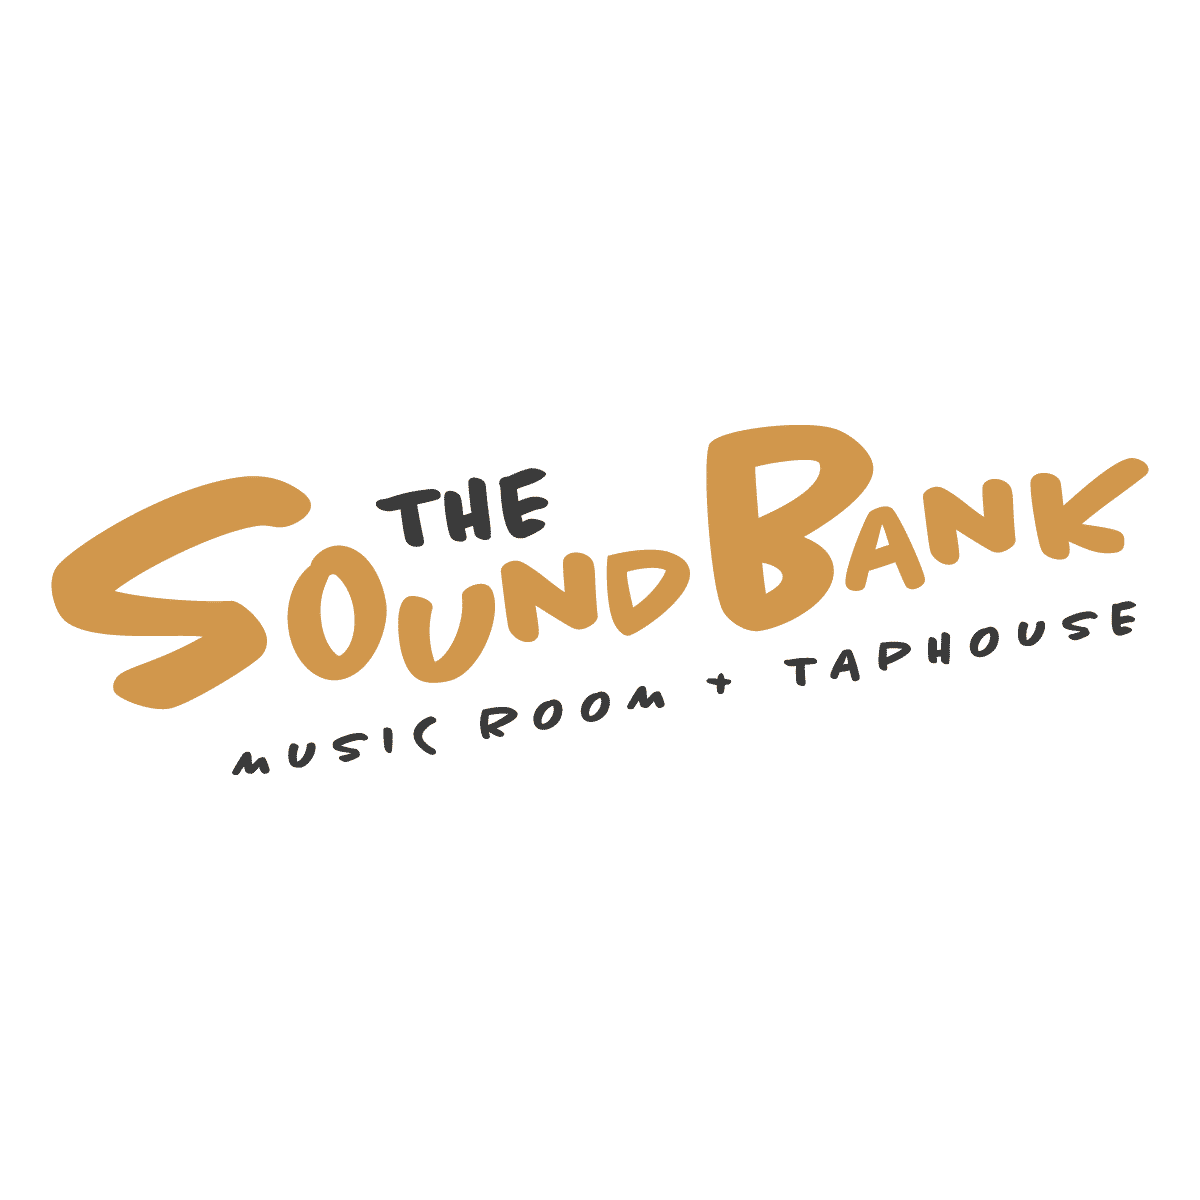 The Soundbank Music Room & Taphouse